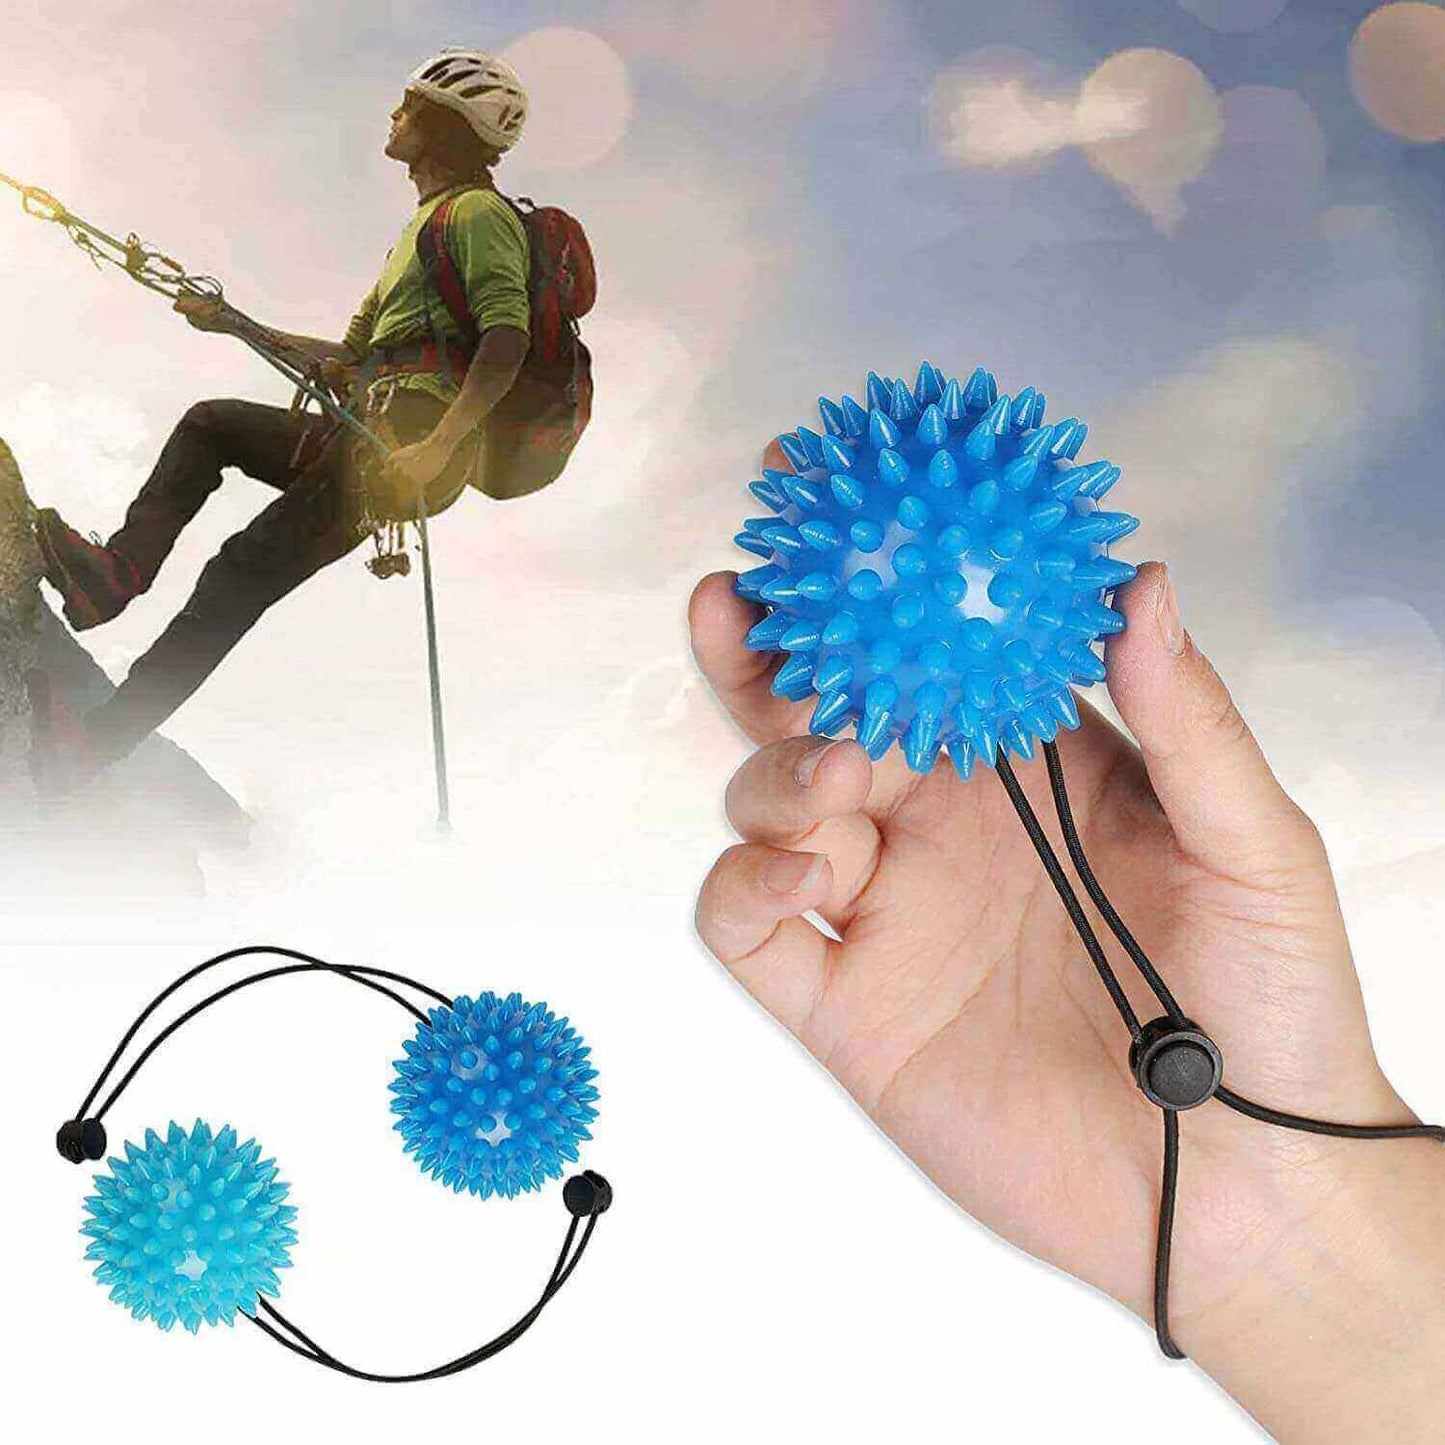 spiky sensory ball on an adjustable string, for rock climbing